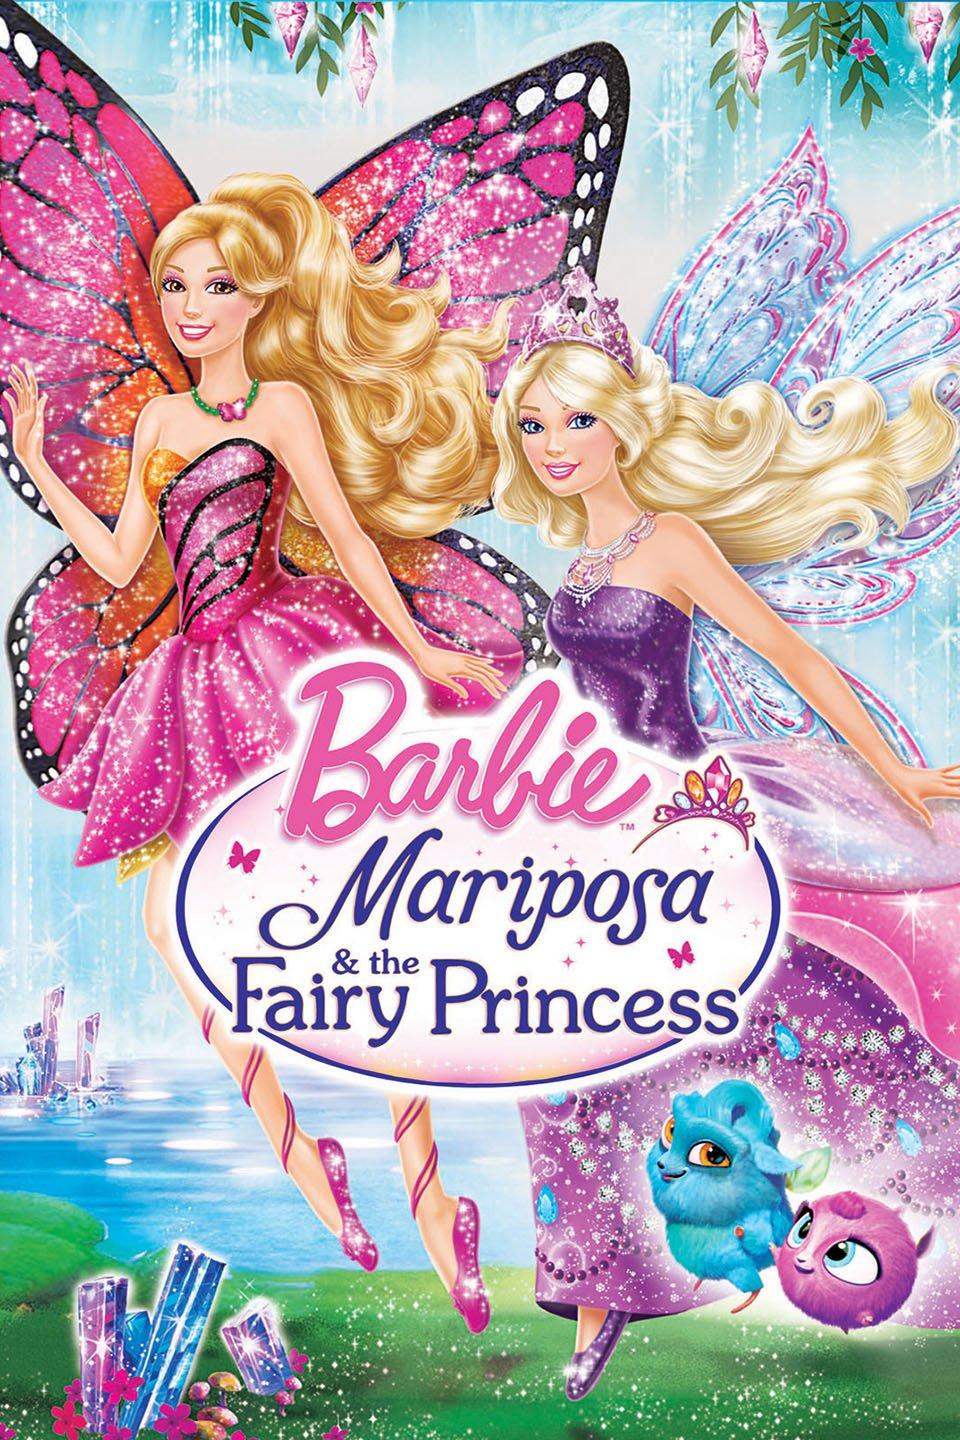 Barbie Movies Gallery: Barbie Mariposa and the Fairy Princess